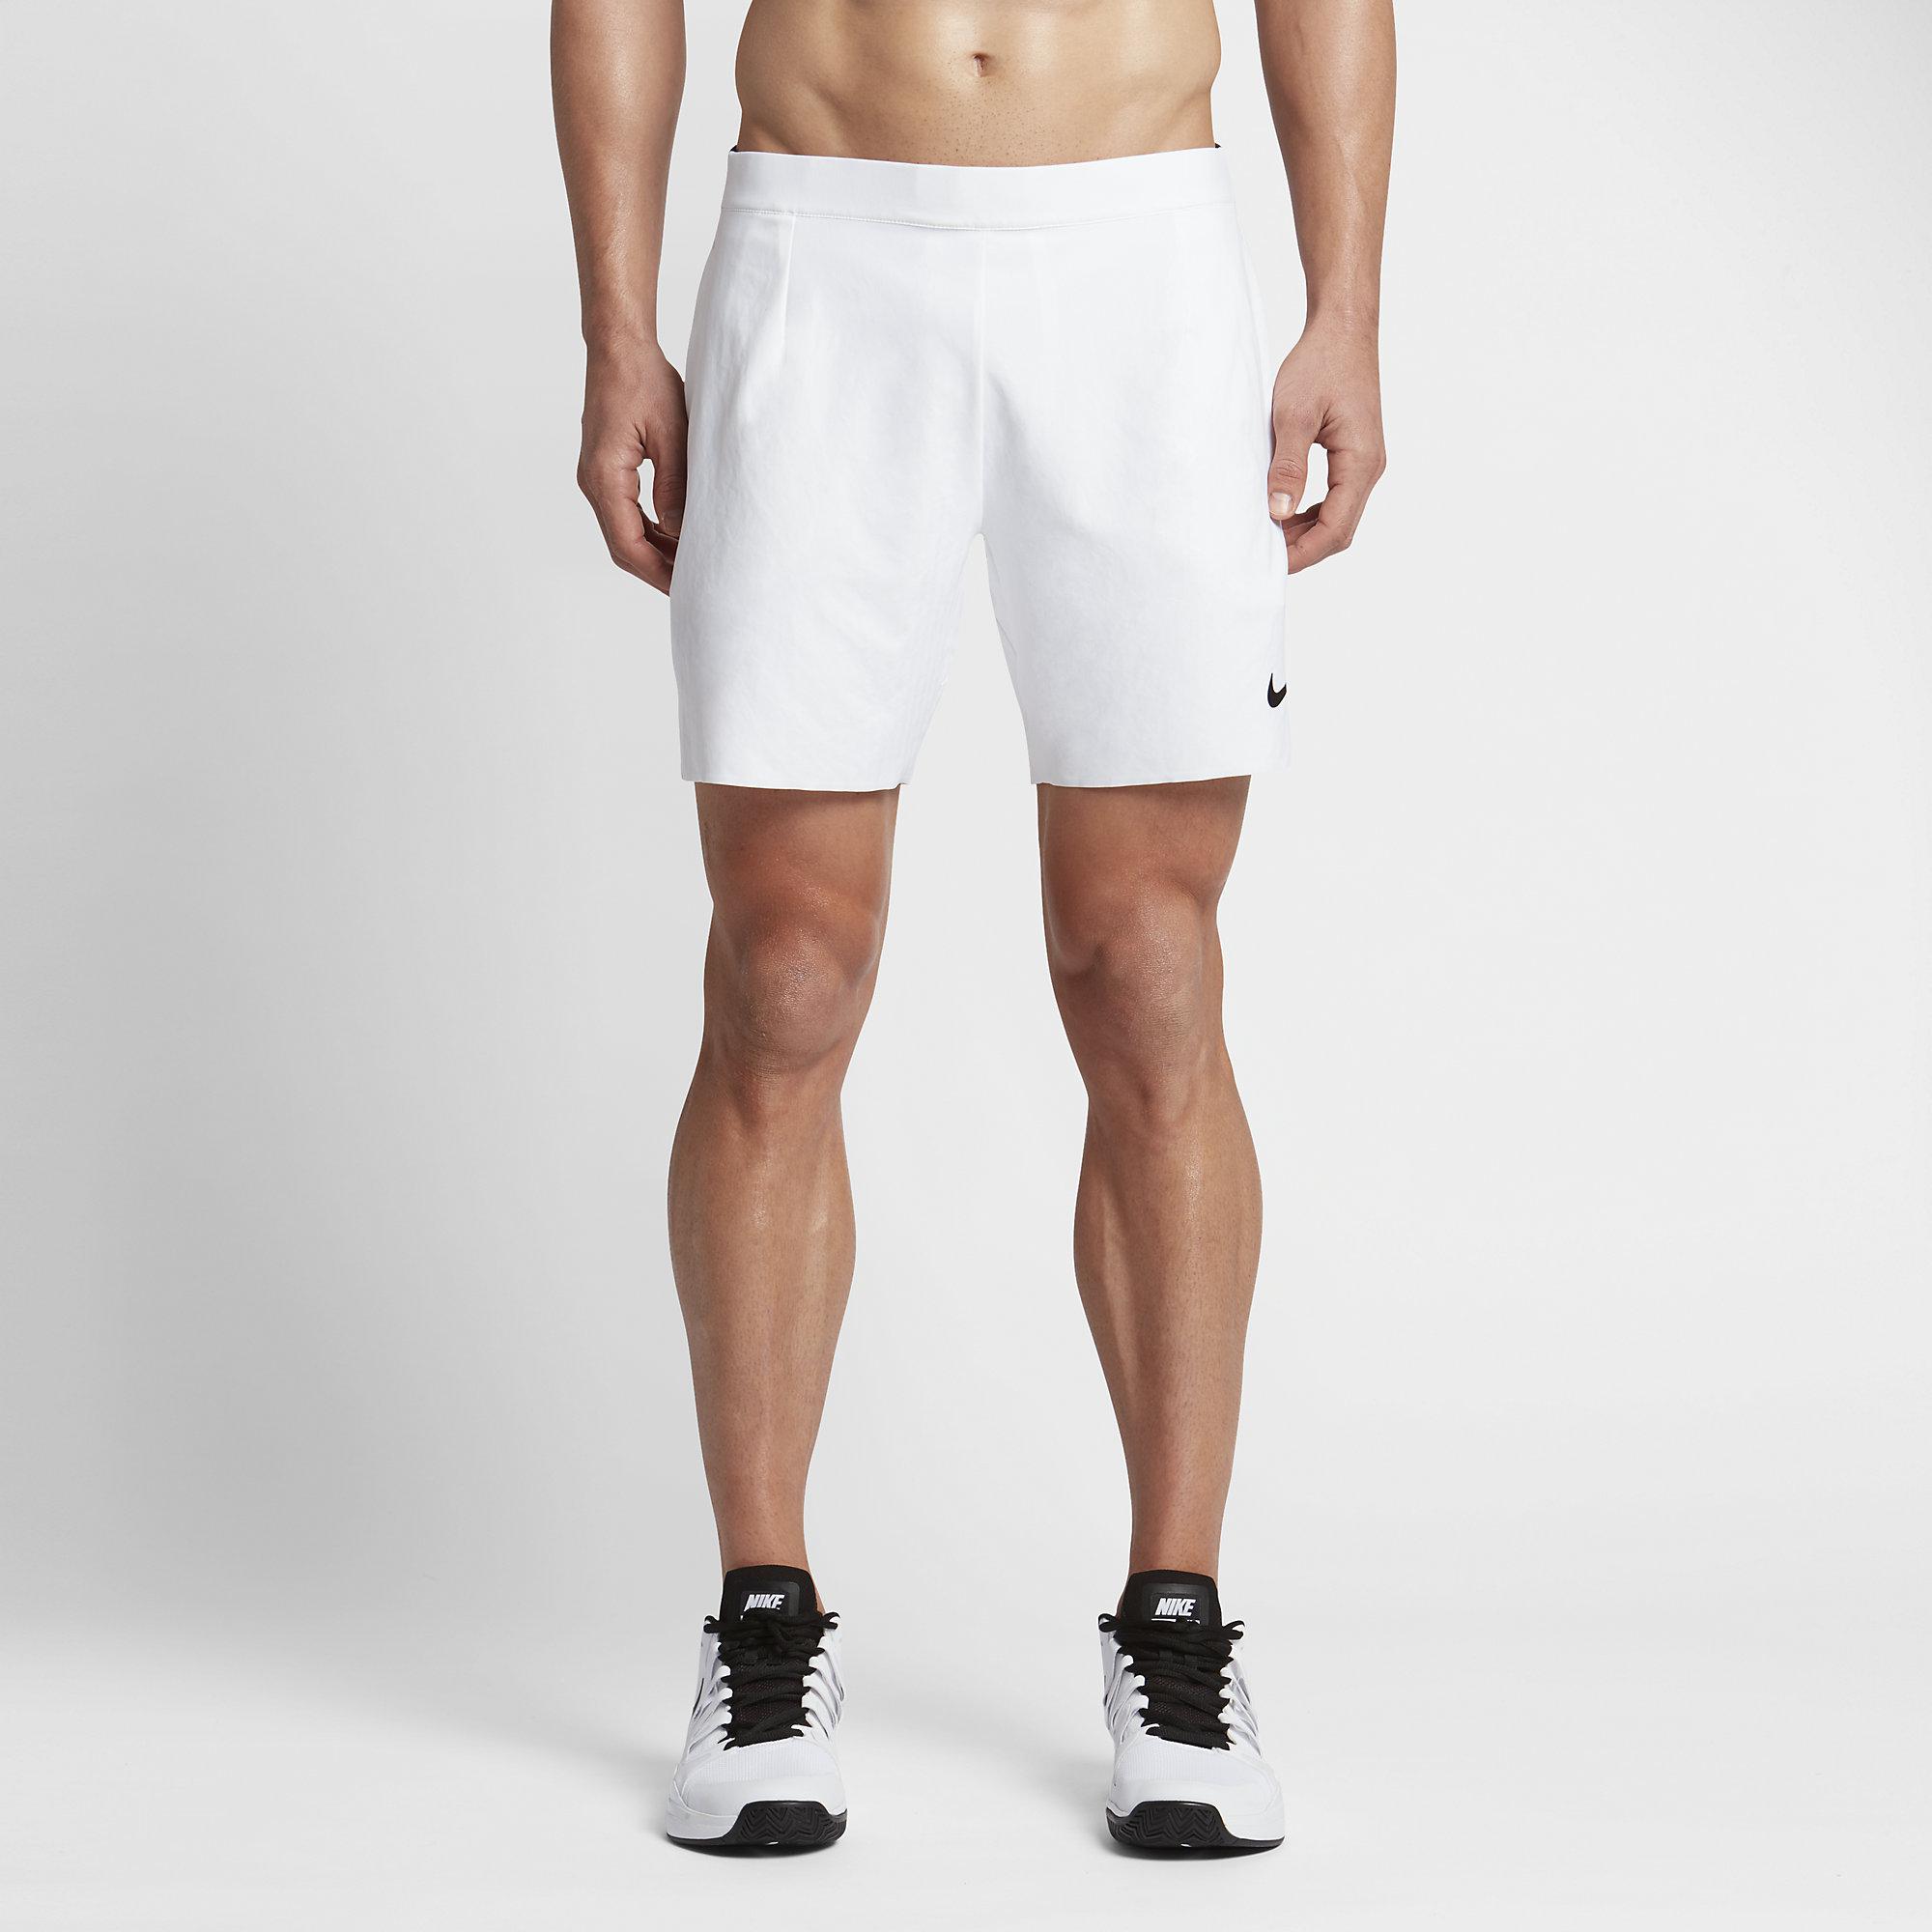 Nike Mens Flex 7 Inch Tennis Shorts - White - Tennisnuts.com